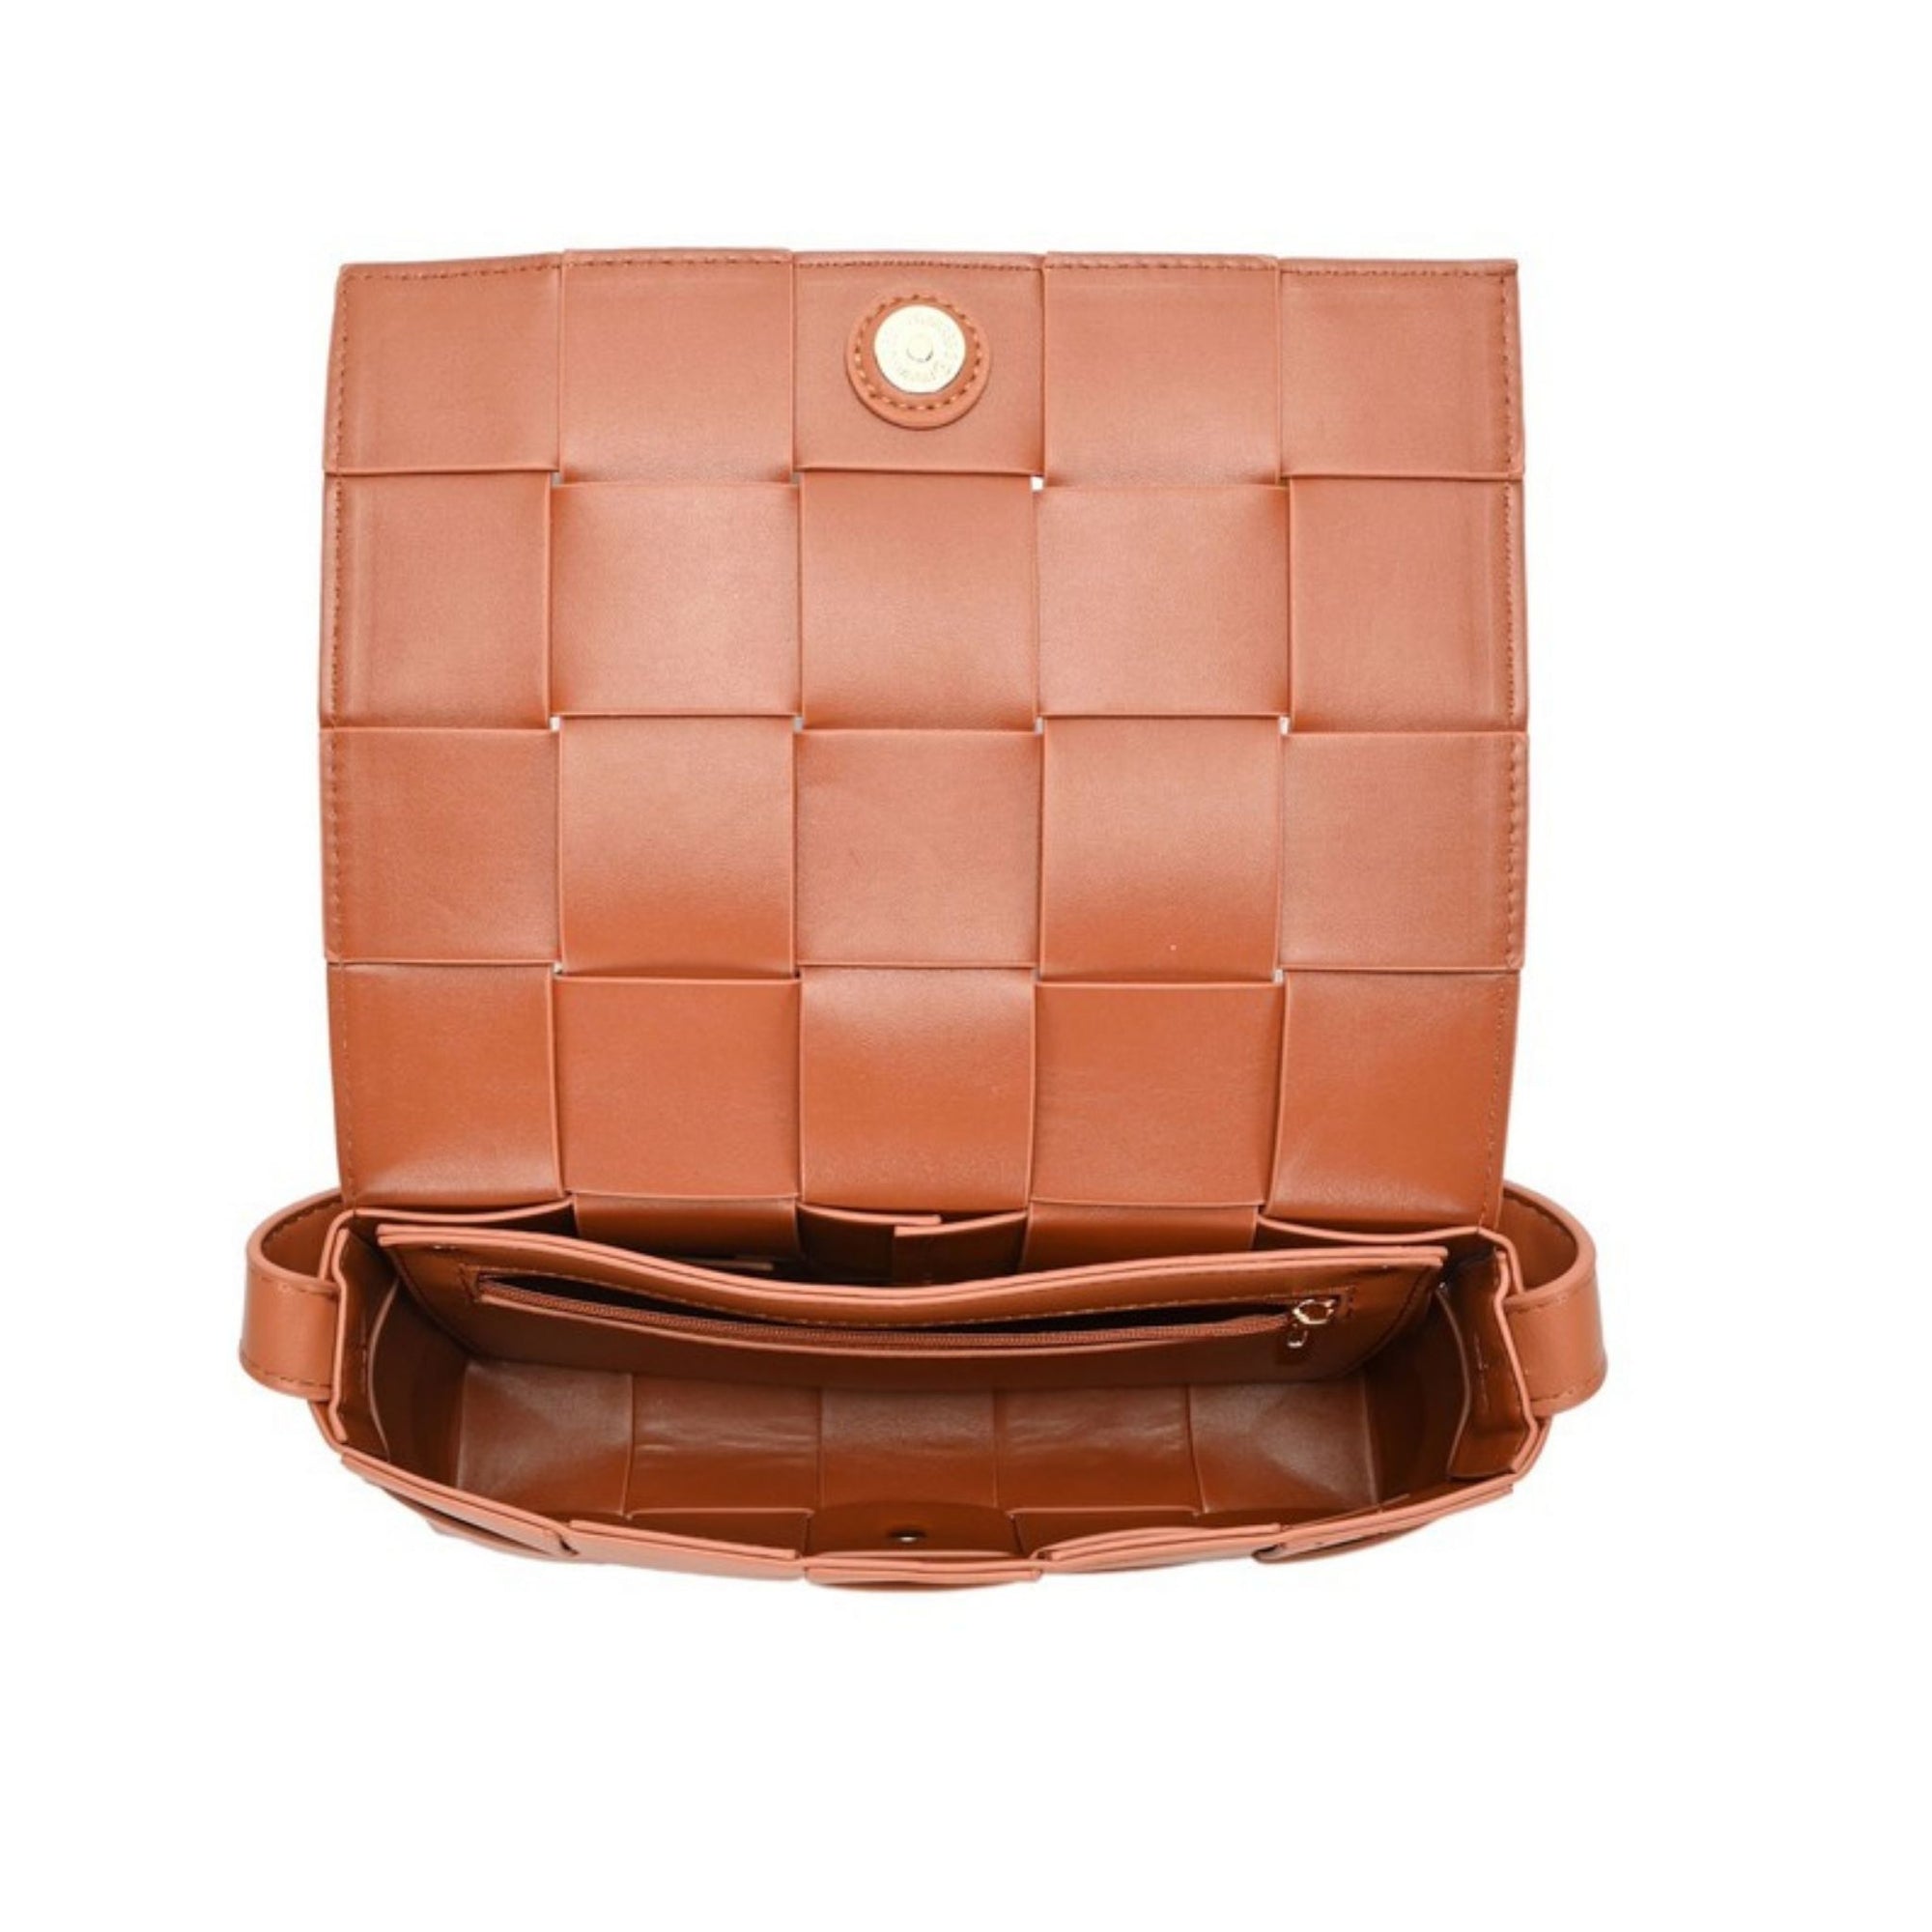 Designer Weave Faux Leather CrossBody Bag